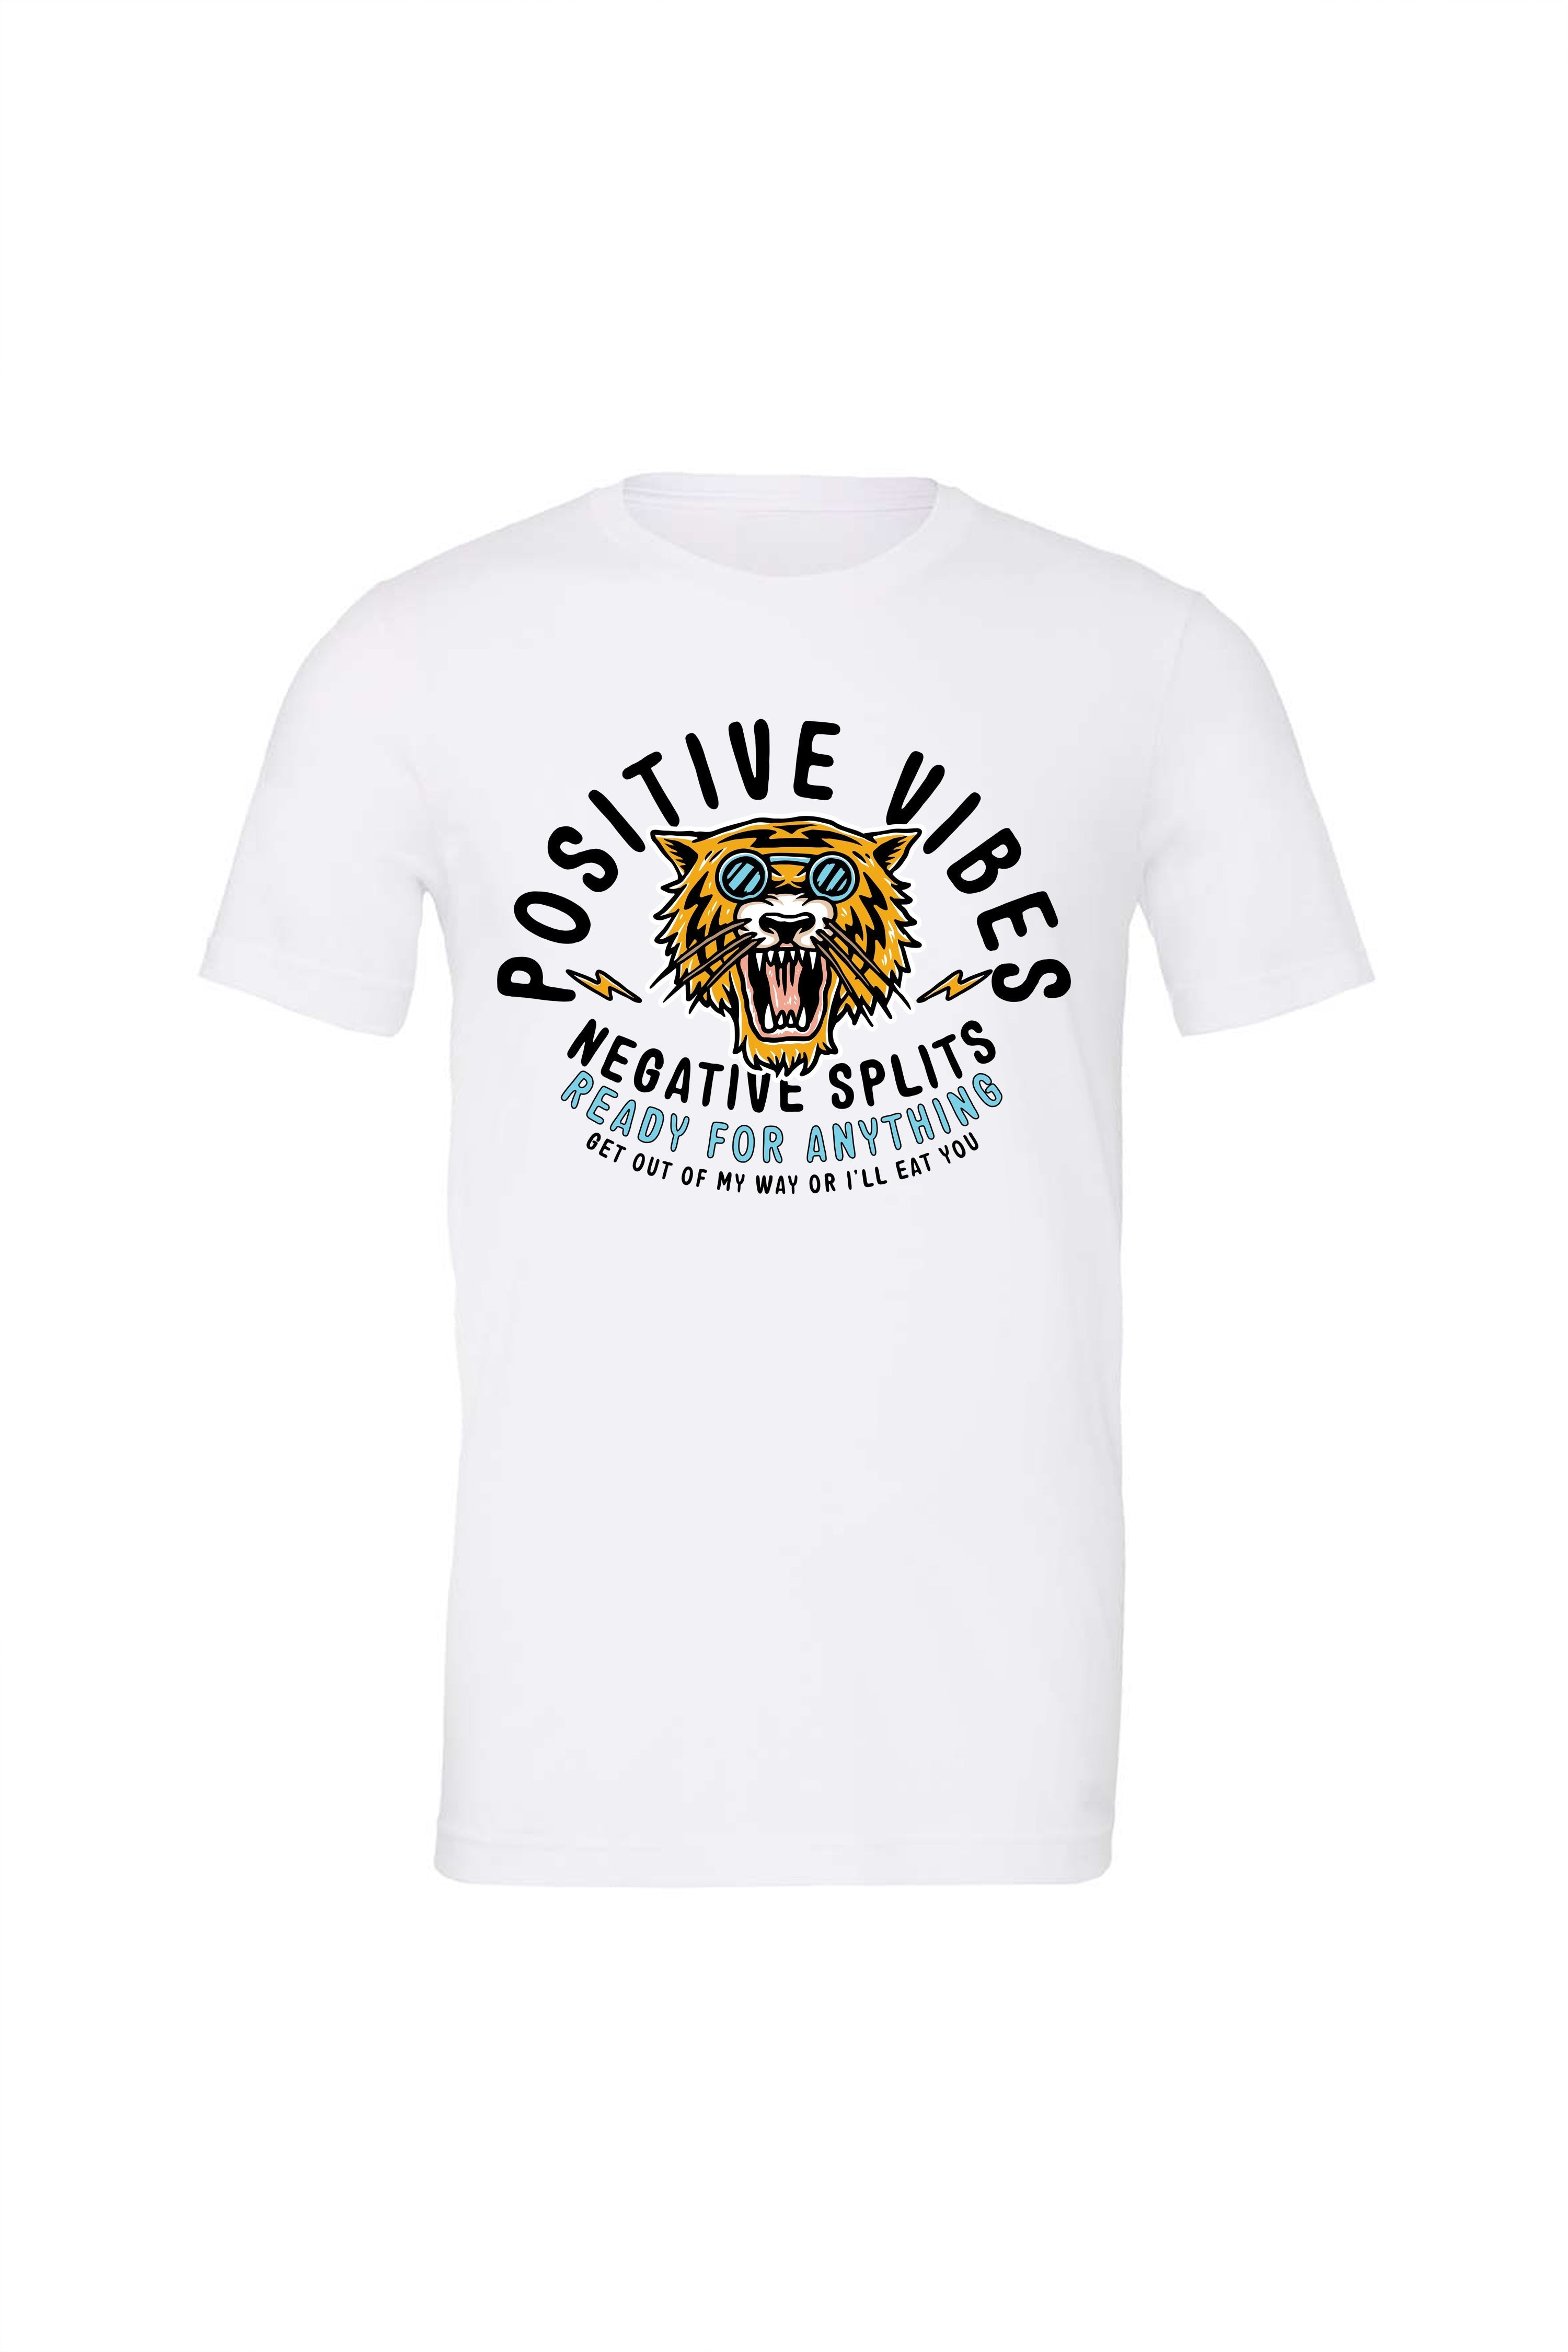 Positive Vibes, Negative Splits Tiger T-Shirt